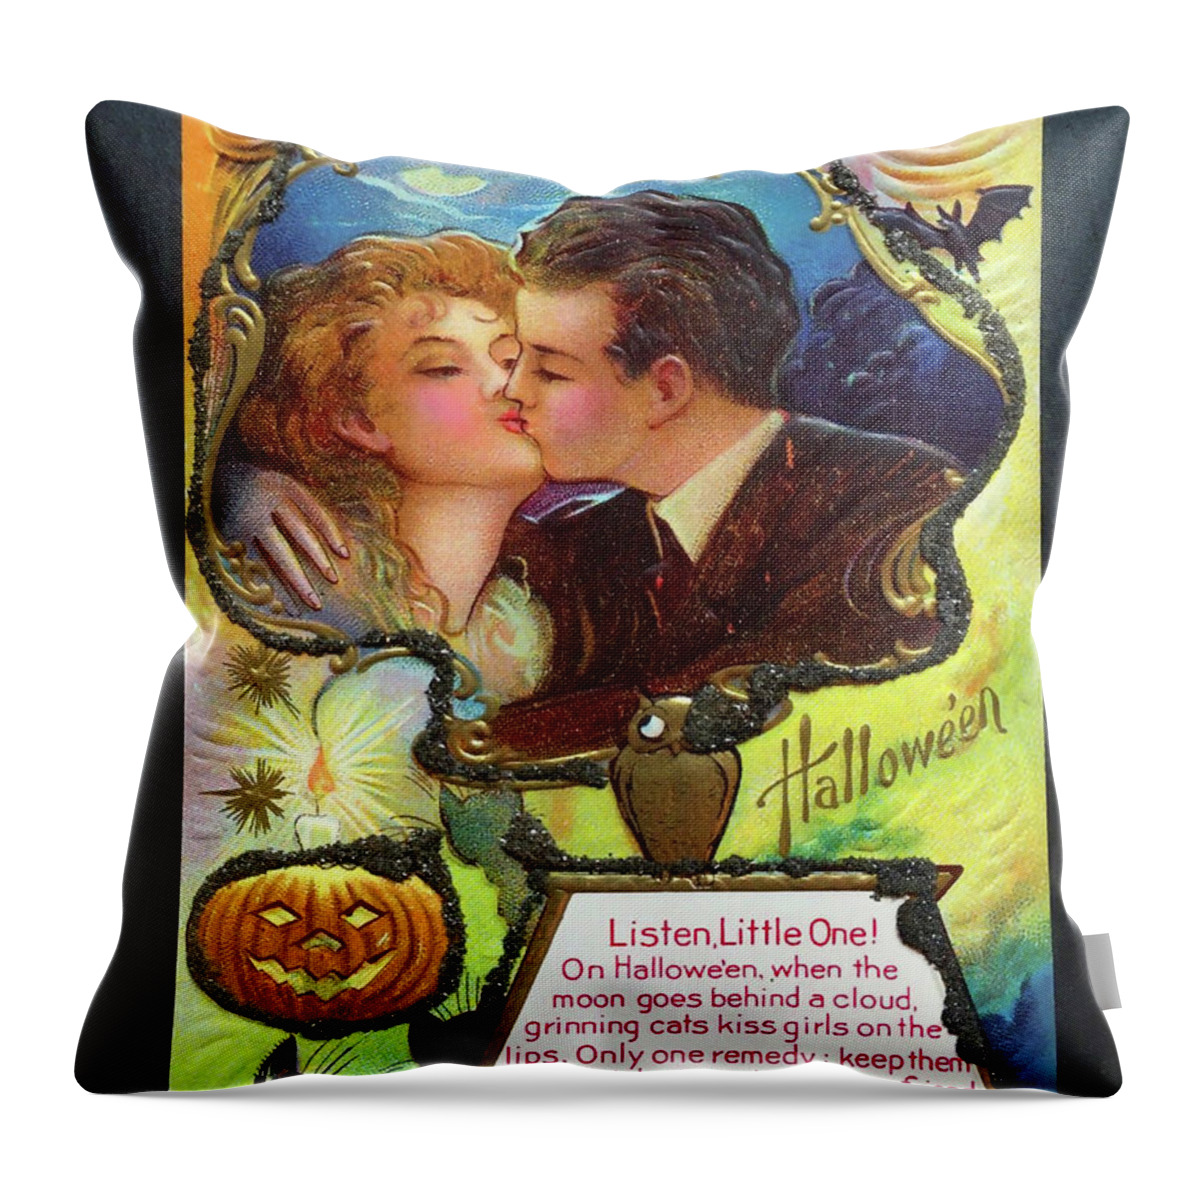 Couple Throw Pillow featuring the digital art Halloween Kiss #1 by Long Shot